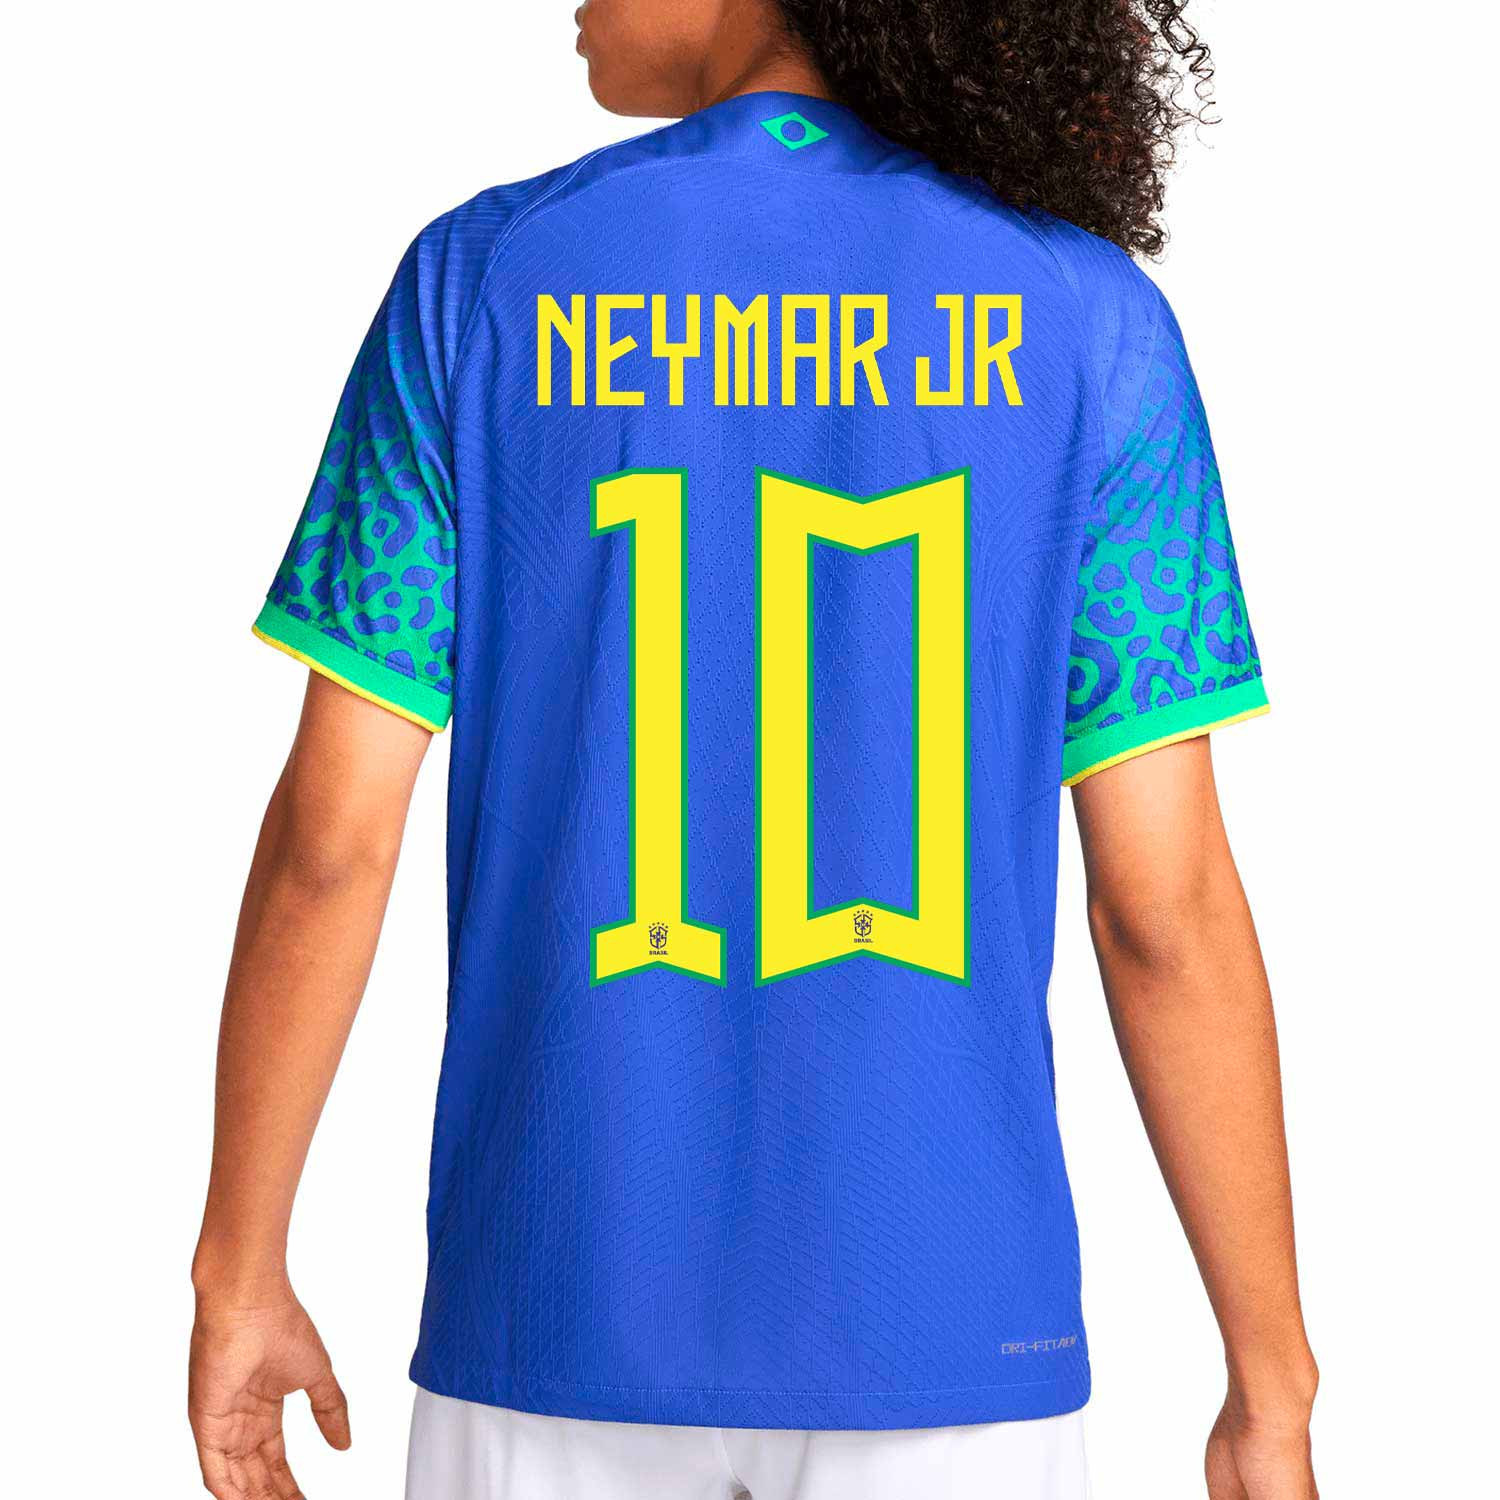 Camisetas Neymar